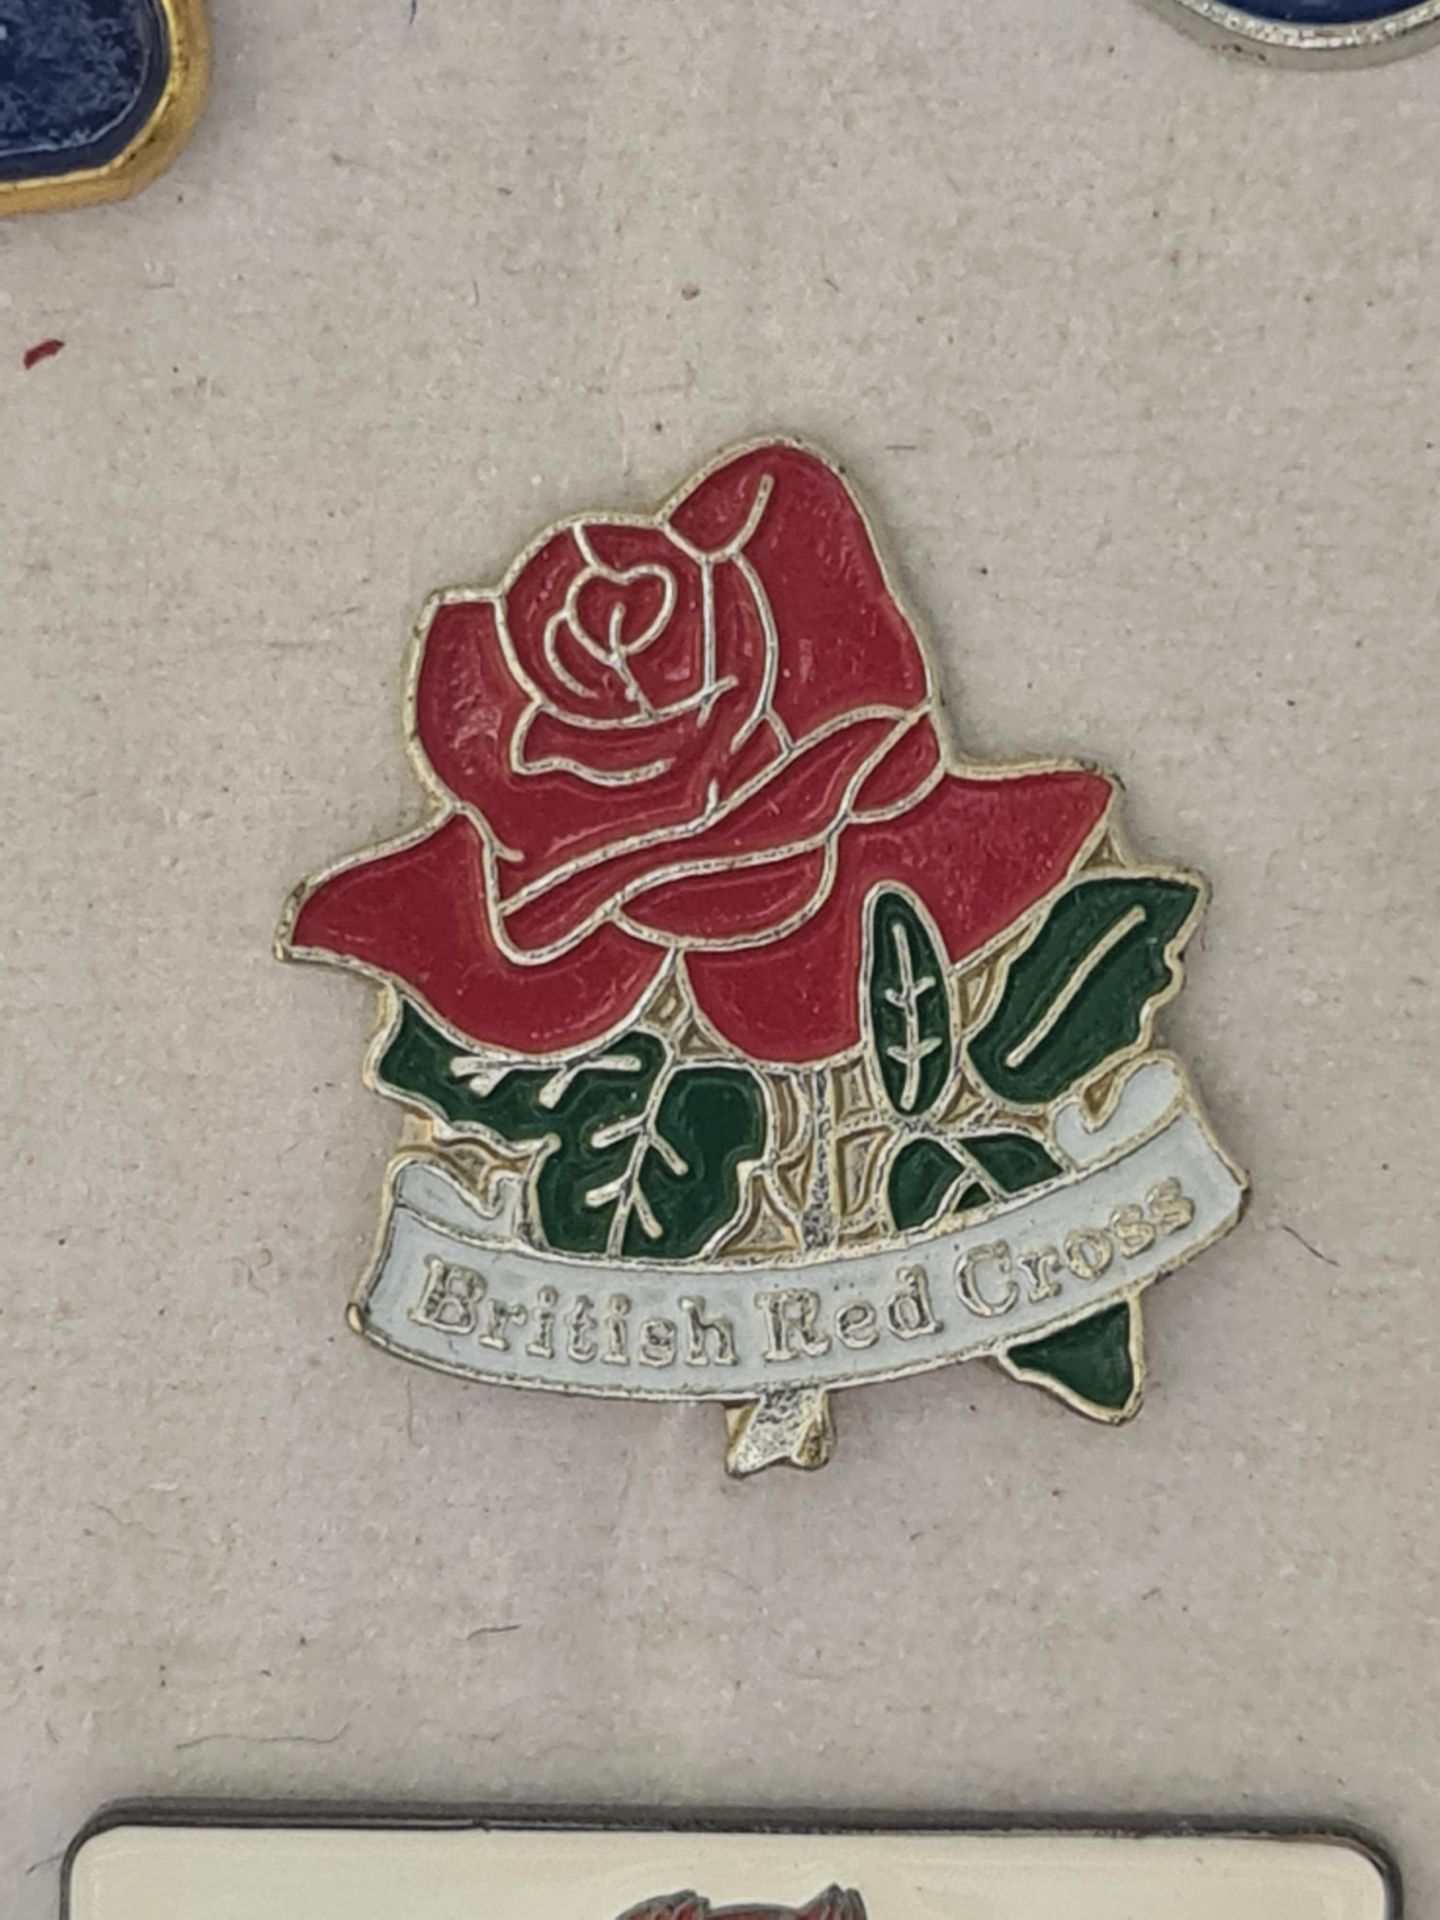 British red Cross Badge